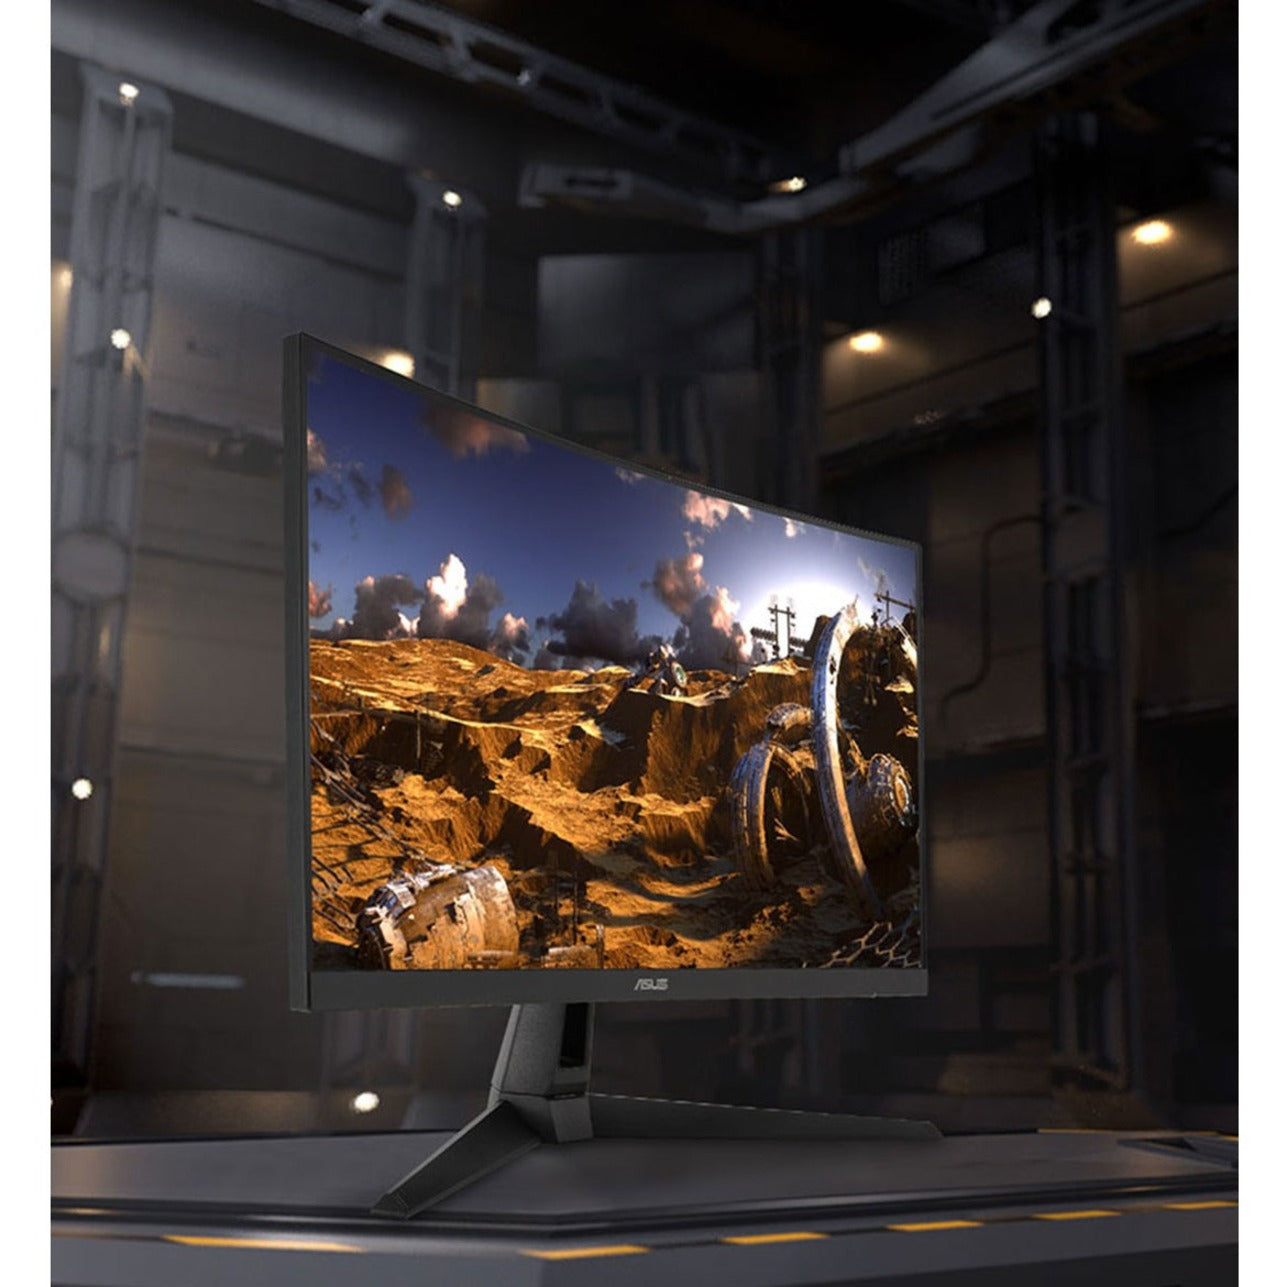 Asus VG27WQ1B Widescreen Gaming LCD Monitor, 27" Curved Screen, WQHD, FreeSync Premium, 1ms Response Time, 250 Nit Brightness, 90% DCI-P3, 120% sRGB